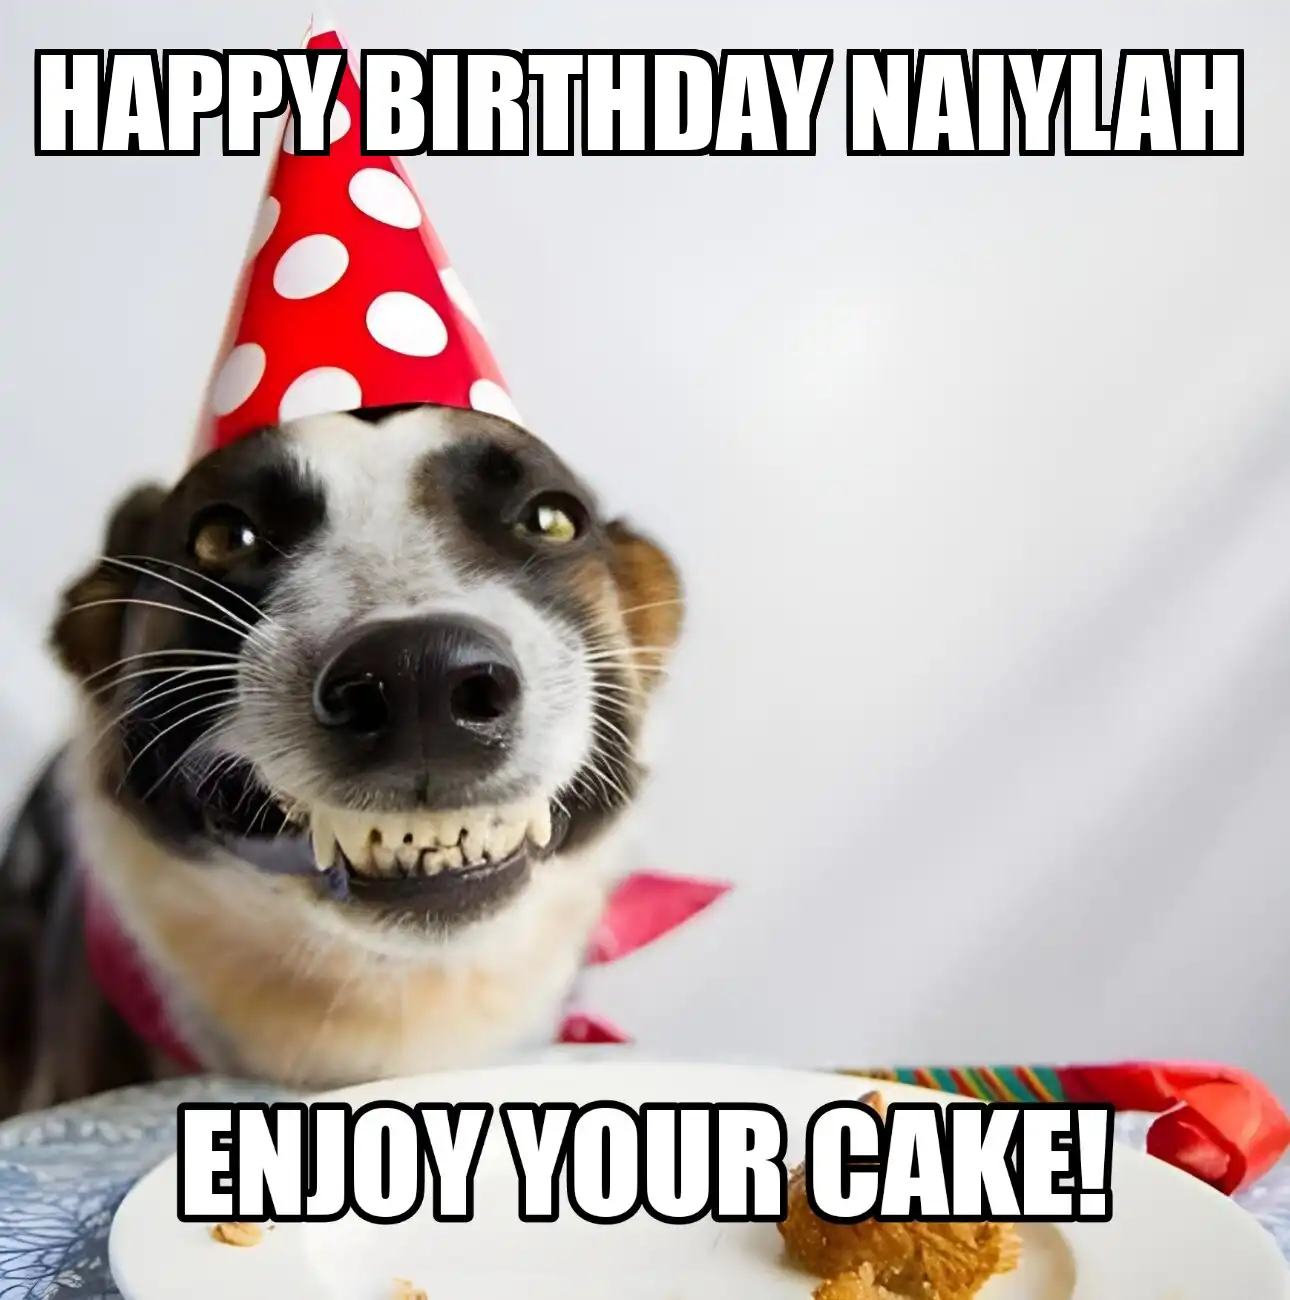 Happy Birthday Naiylah Enjoy Your Cake Dog Meme